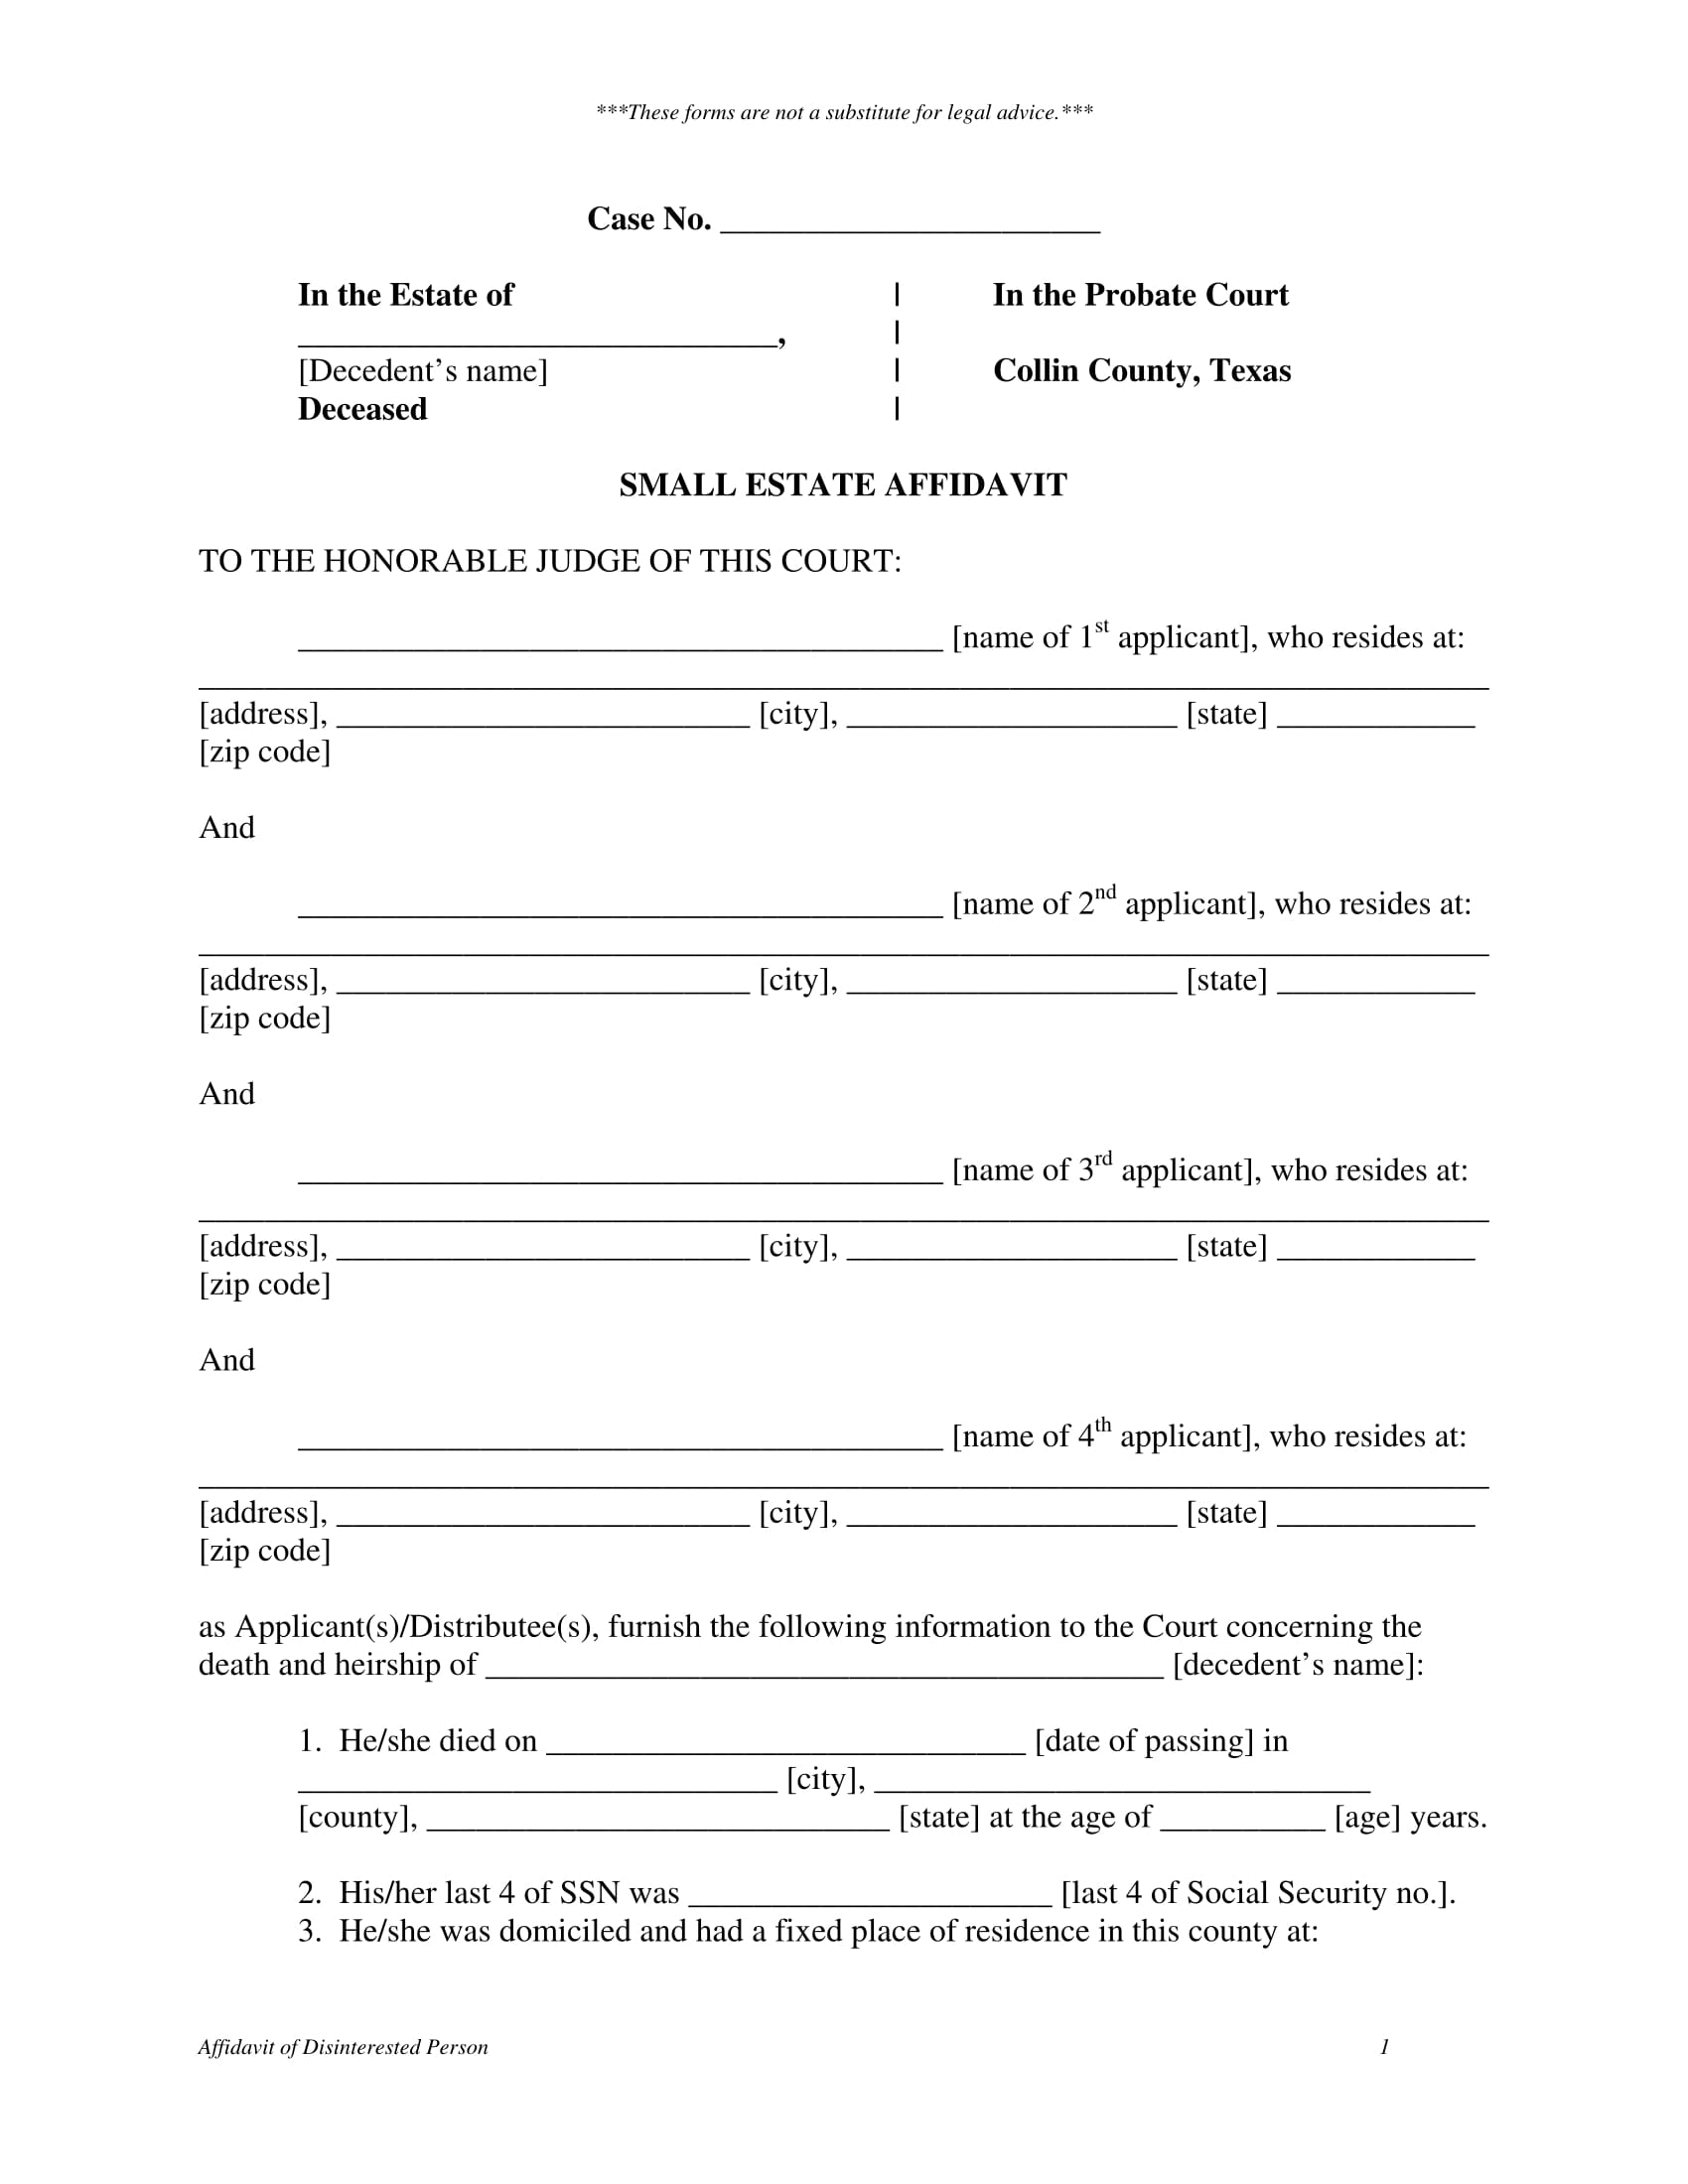 probate court small estate affidavit form 03